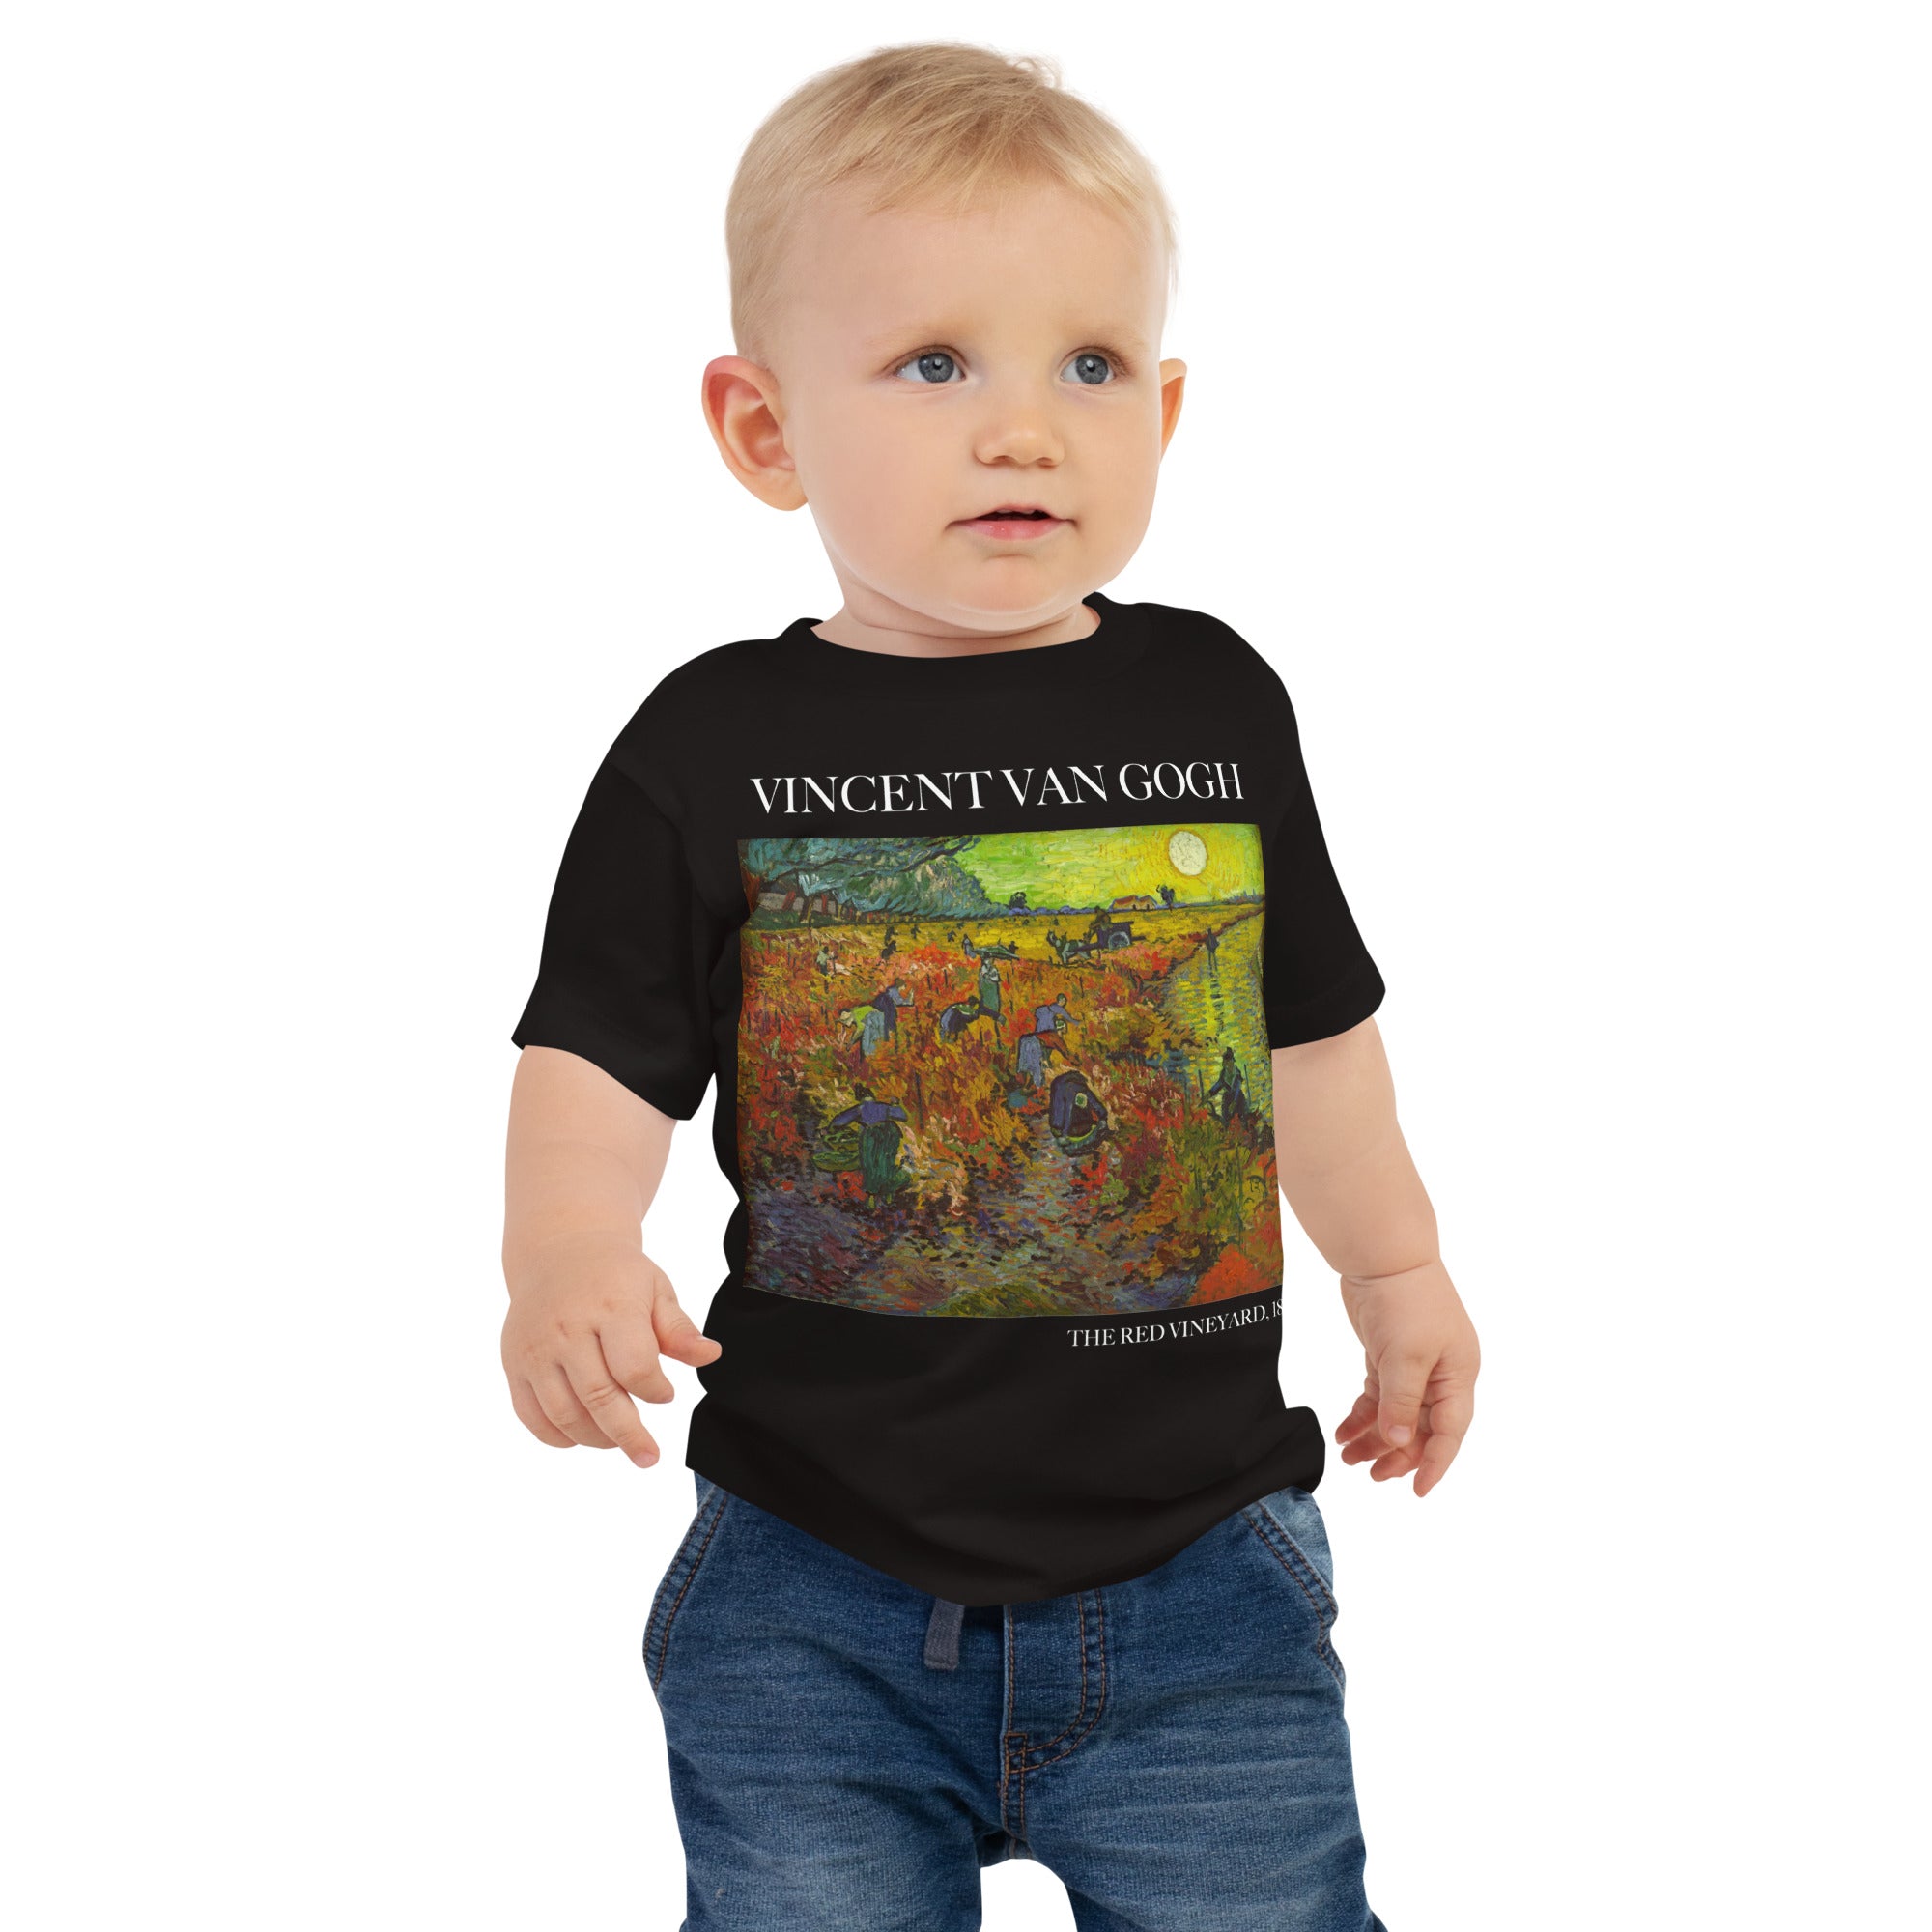 Vincent van Gogh 'The Red Vineyard' Famous Painting Baby Staple T-Shirt | Premium Baby Art Tee